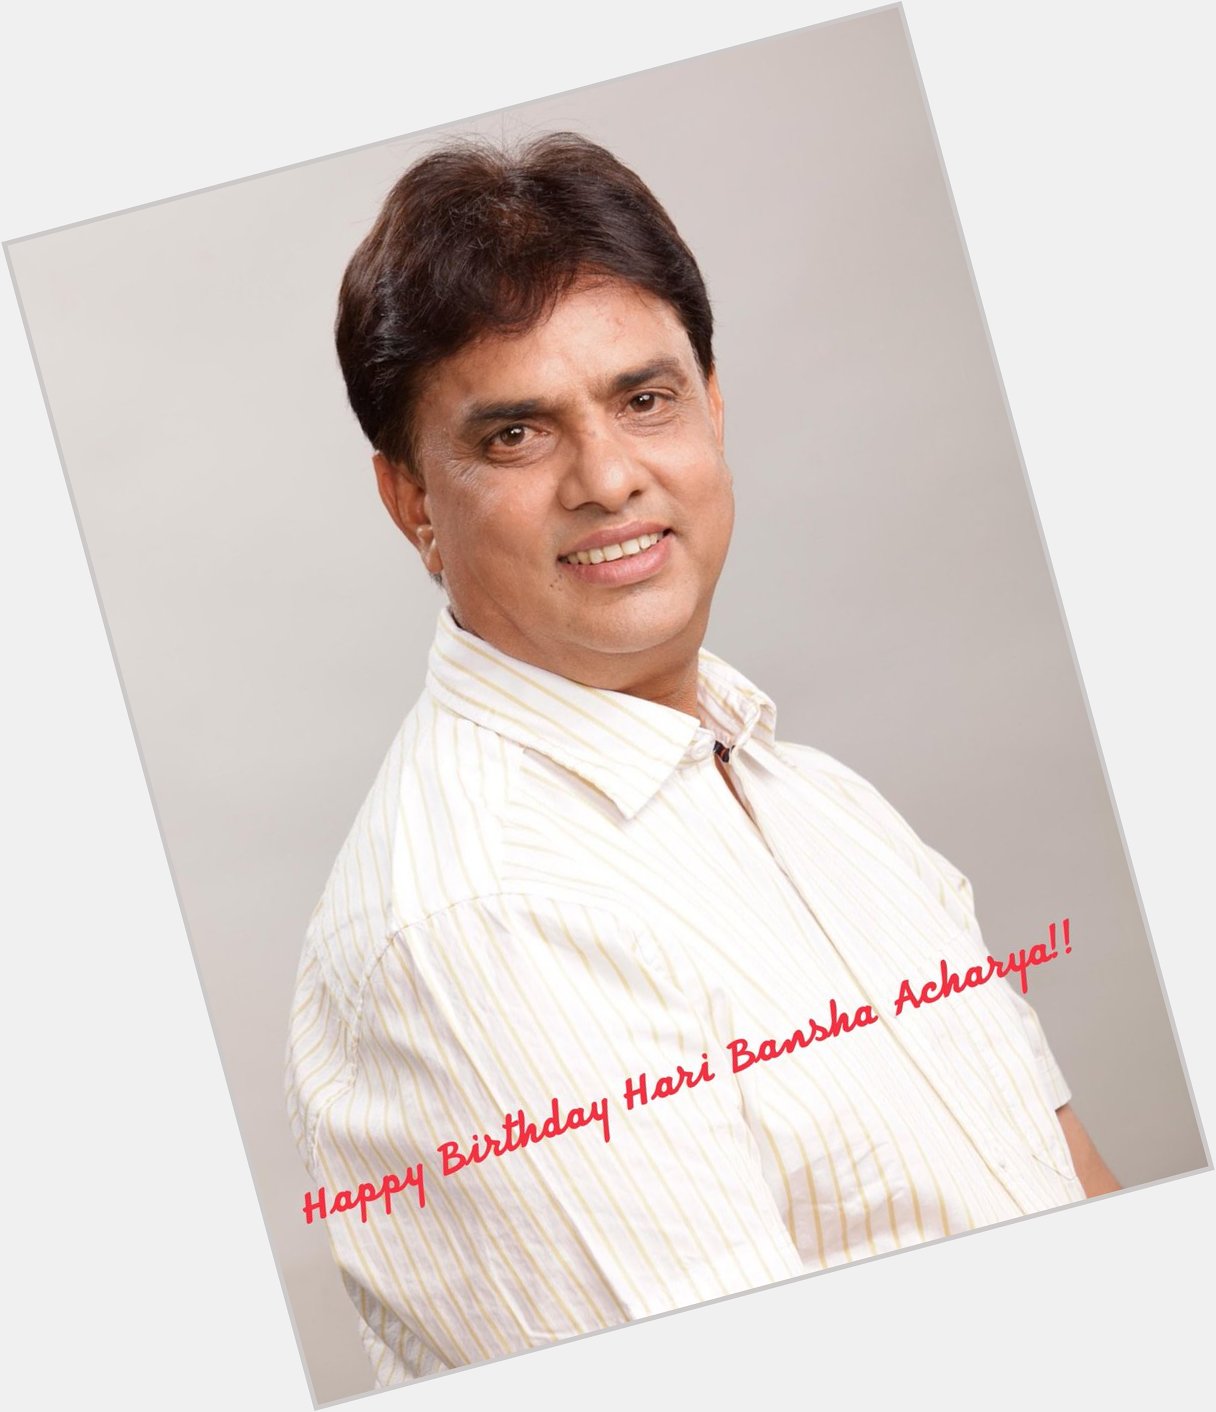 Happy Birthday Hari Bansha Acharya!! 
An actor, comedian, singer, writer and a respectable human being!! 